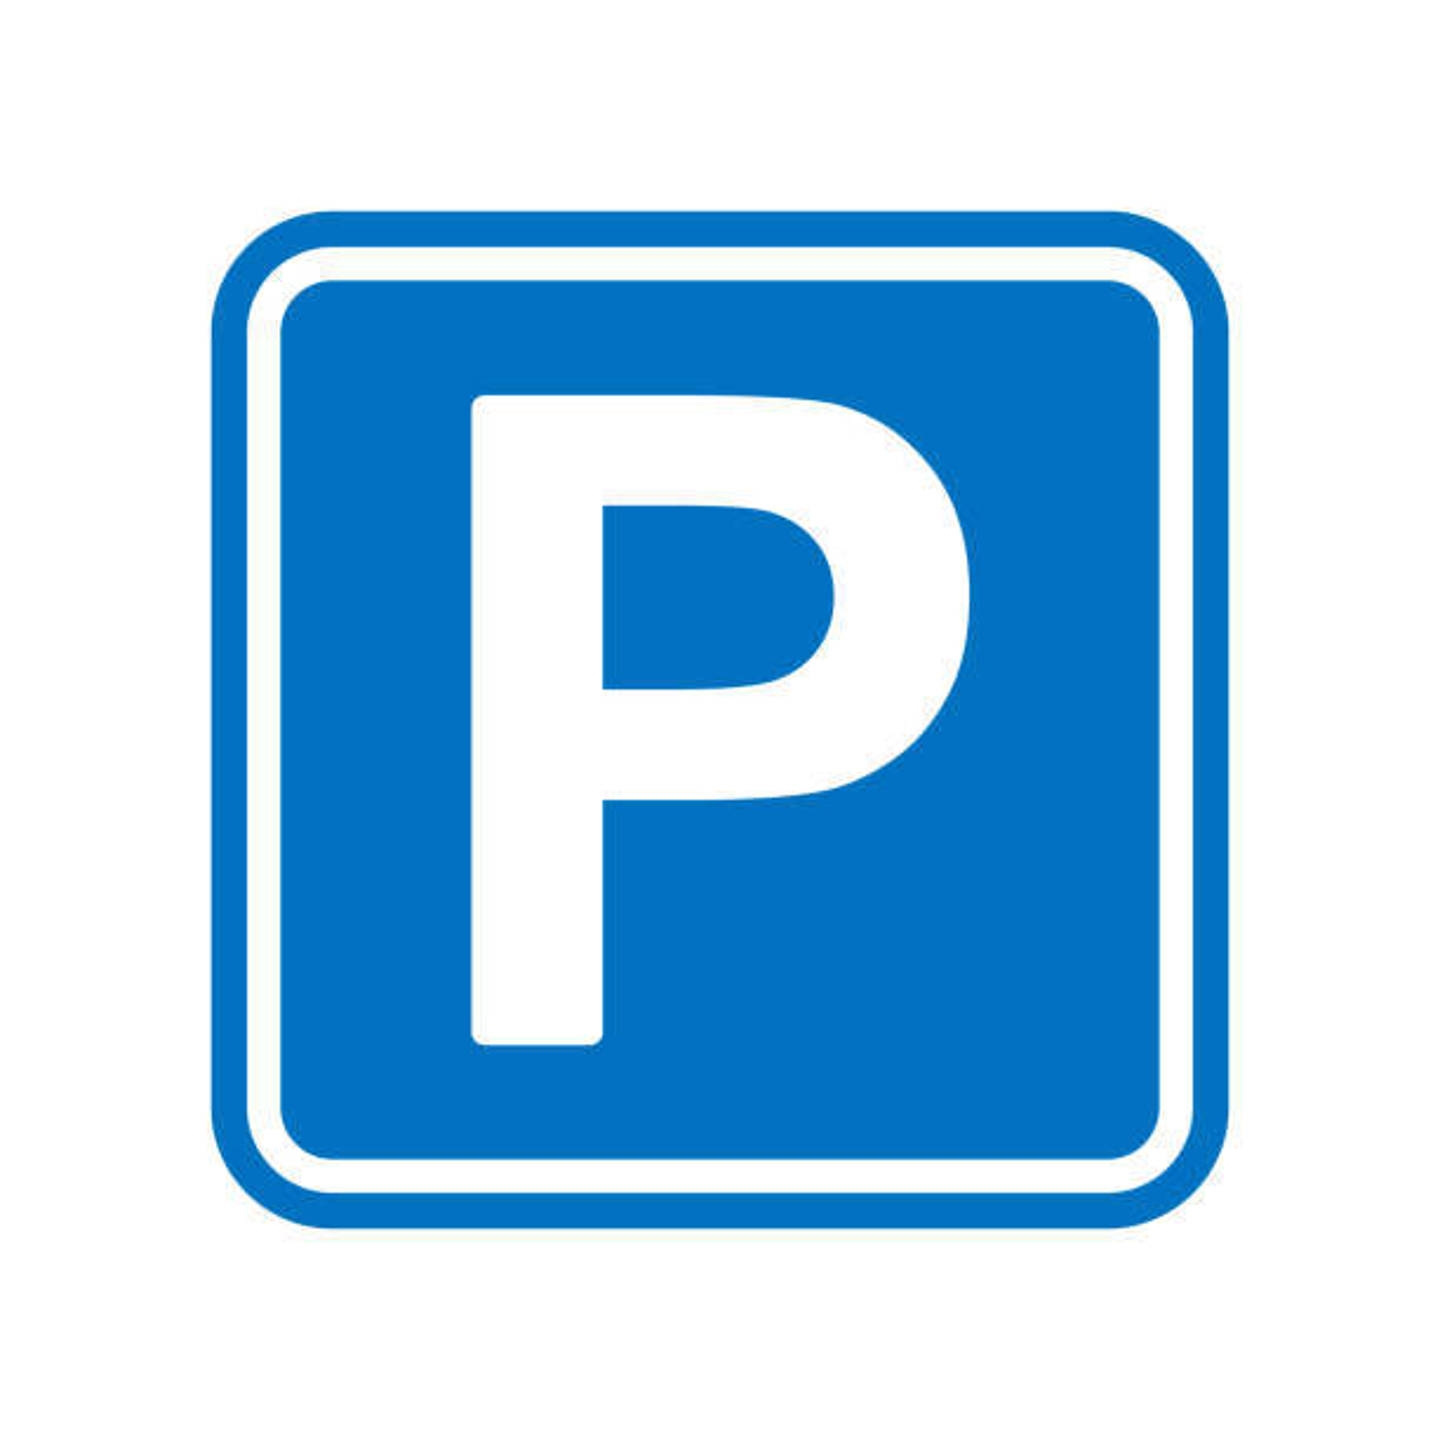 Parking / garage à vendre à Neder-Over-Heembeek 1120 16480.00€  chambres 12.50m² - annonce 1324760